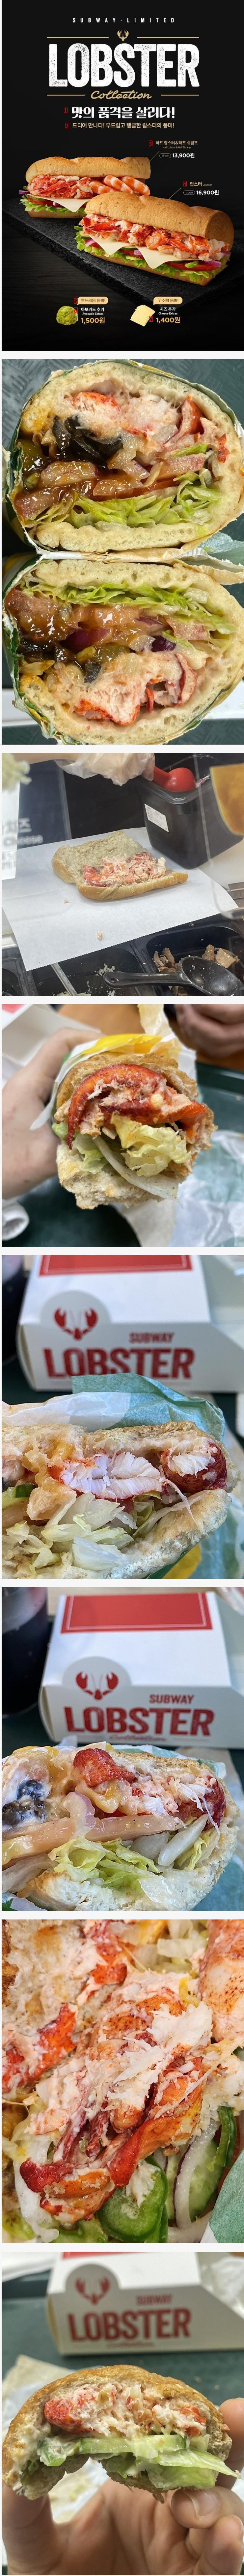 Subway 1,6900 won lobster sandwich